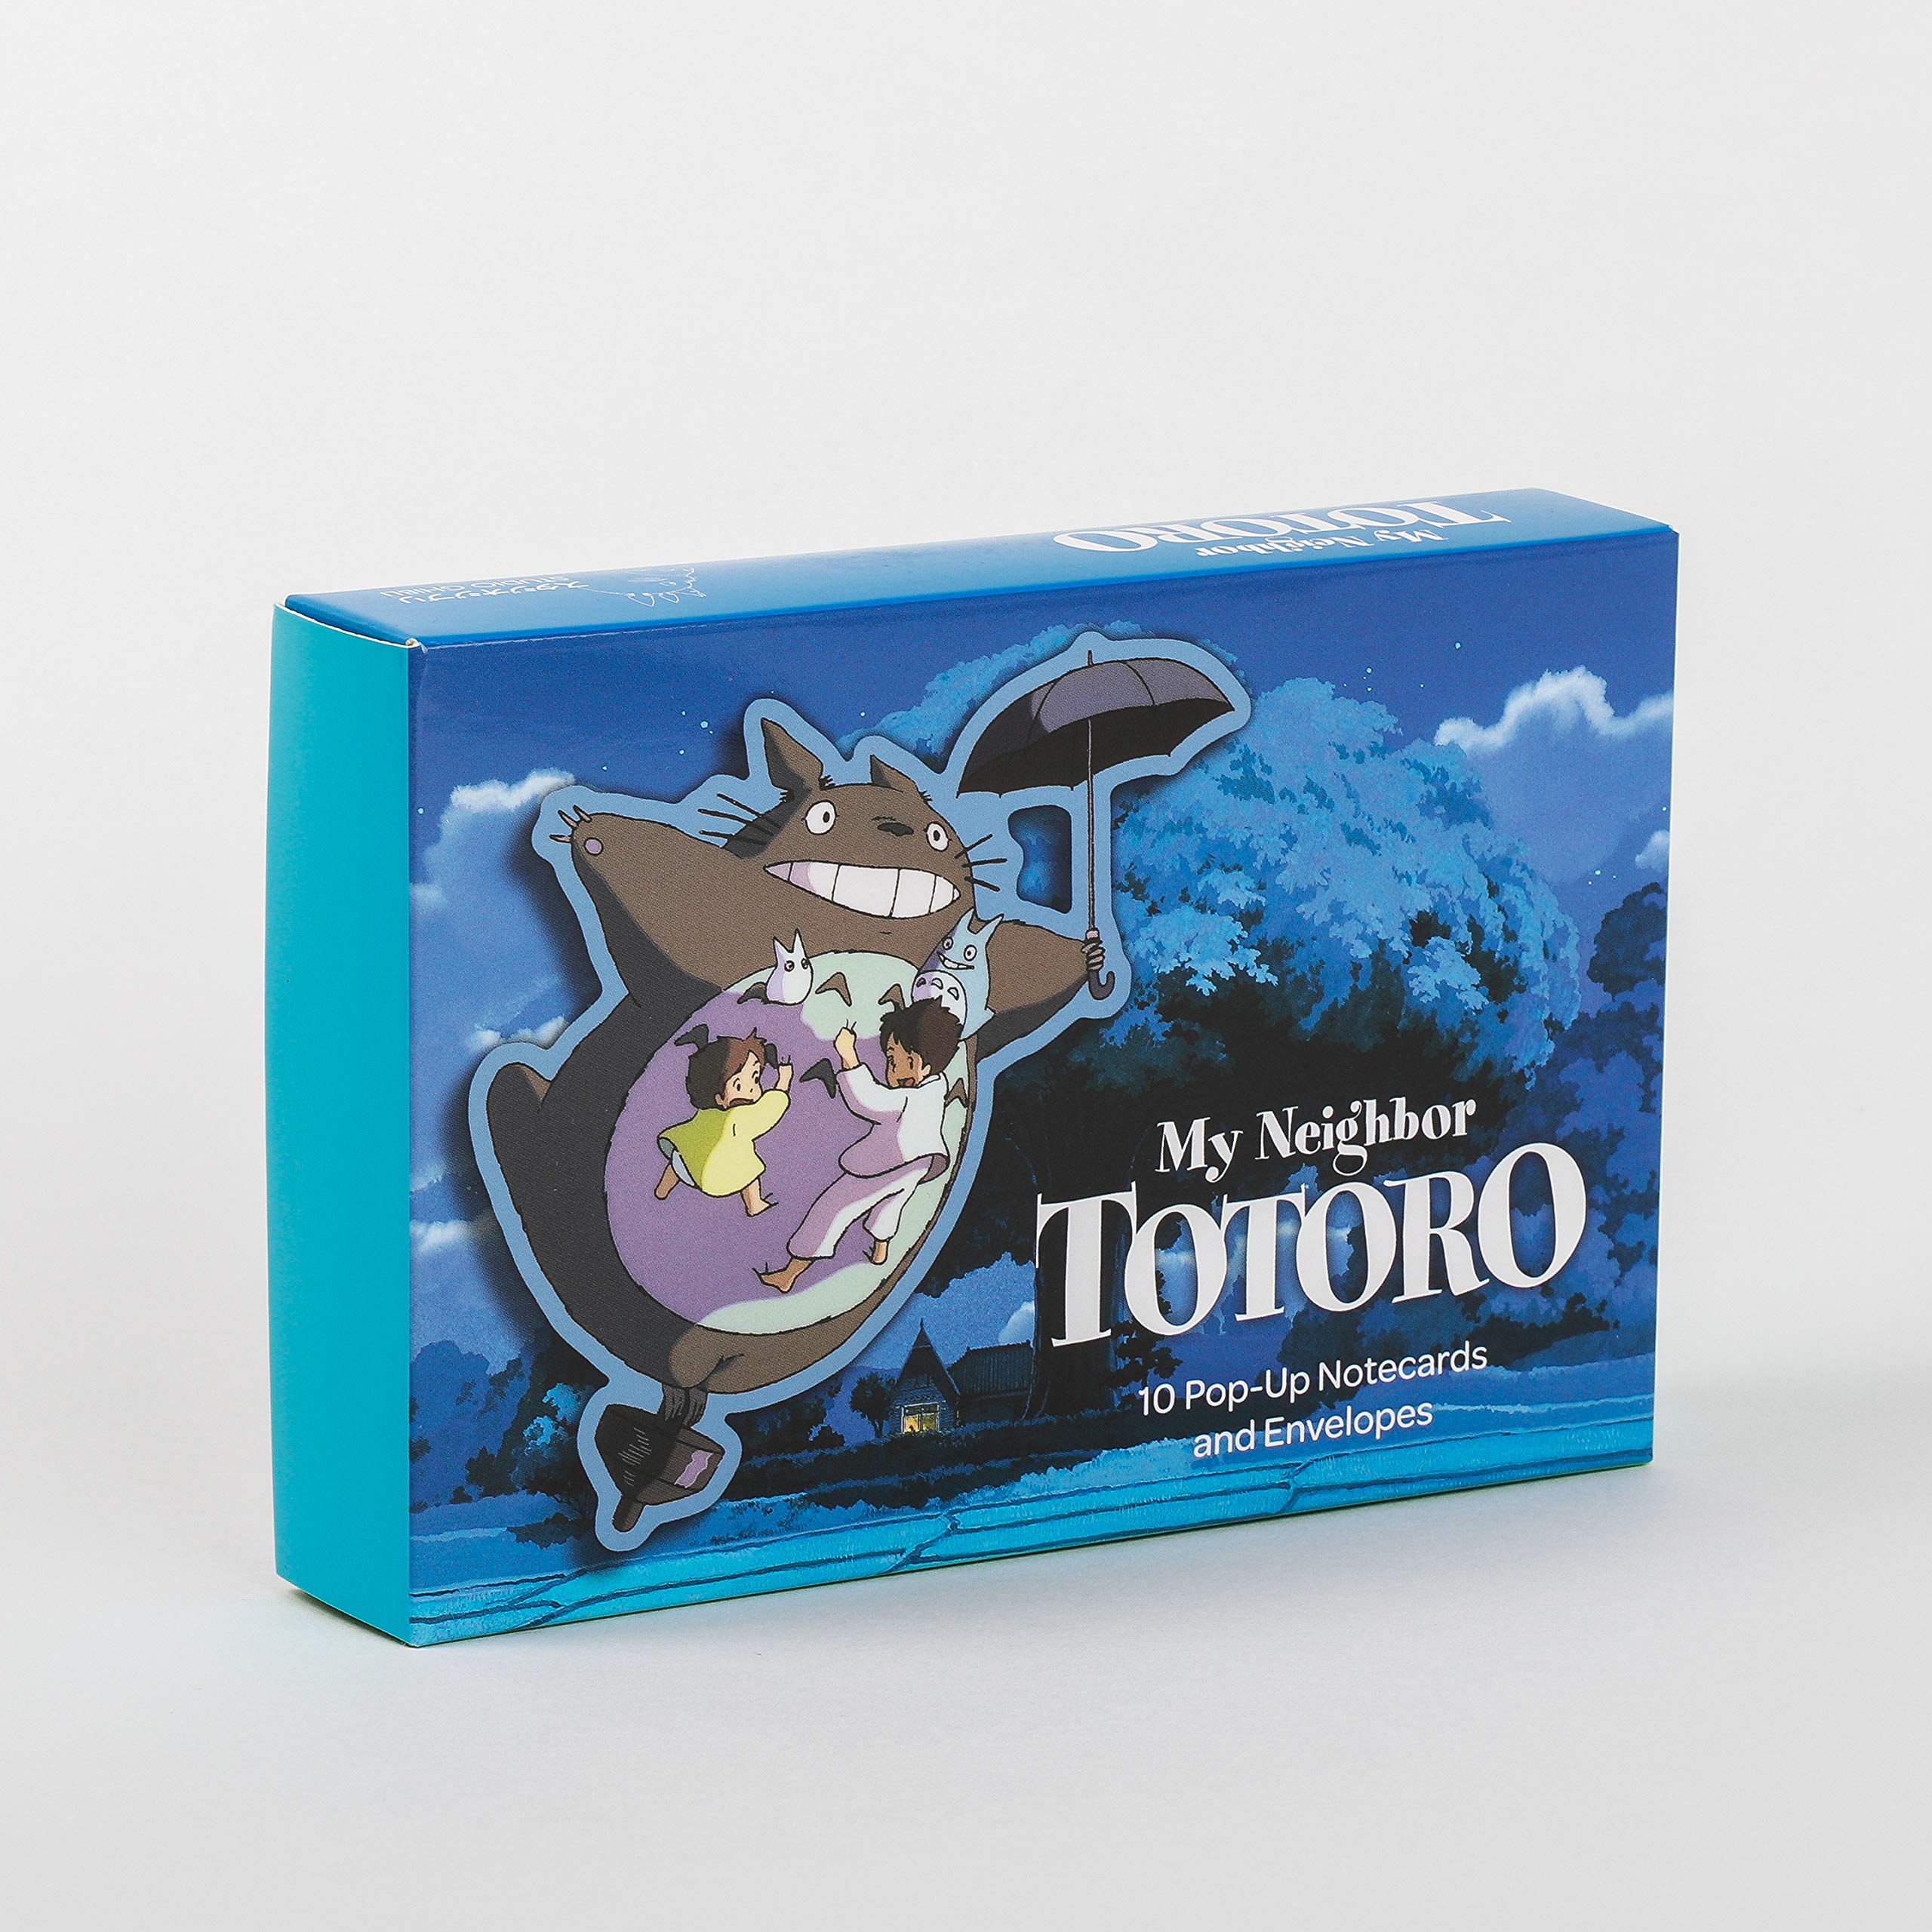 My Neighbor Totoro: 10 Pop-Up Notecards and Envelopes (Totoro Products, Studio Ghibli Products, Totoro Art)